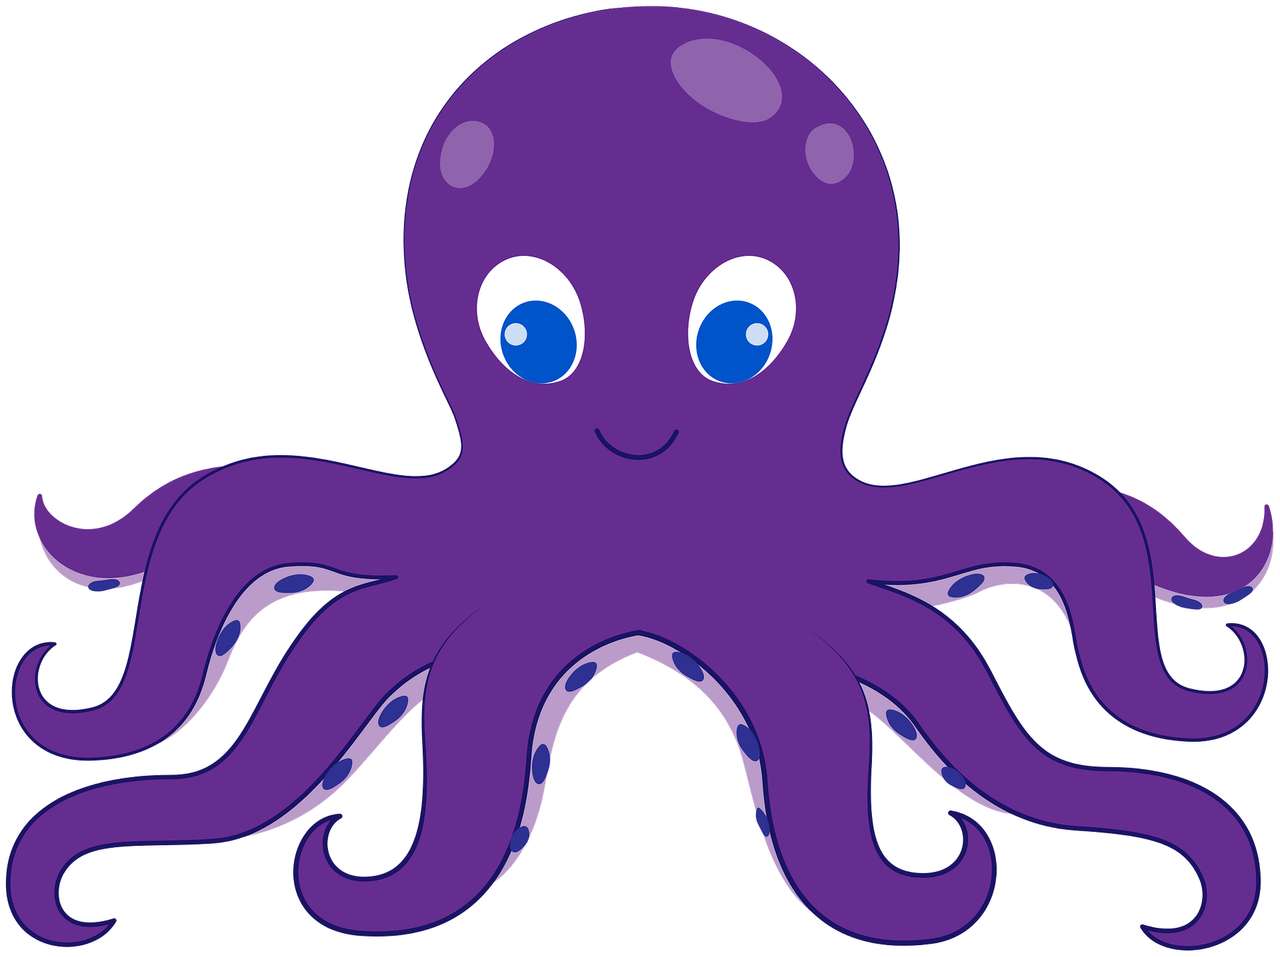 Octopus (rompecabezas) rompecabezas en línea